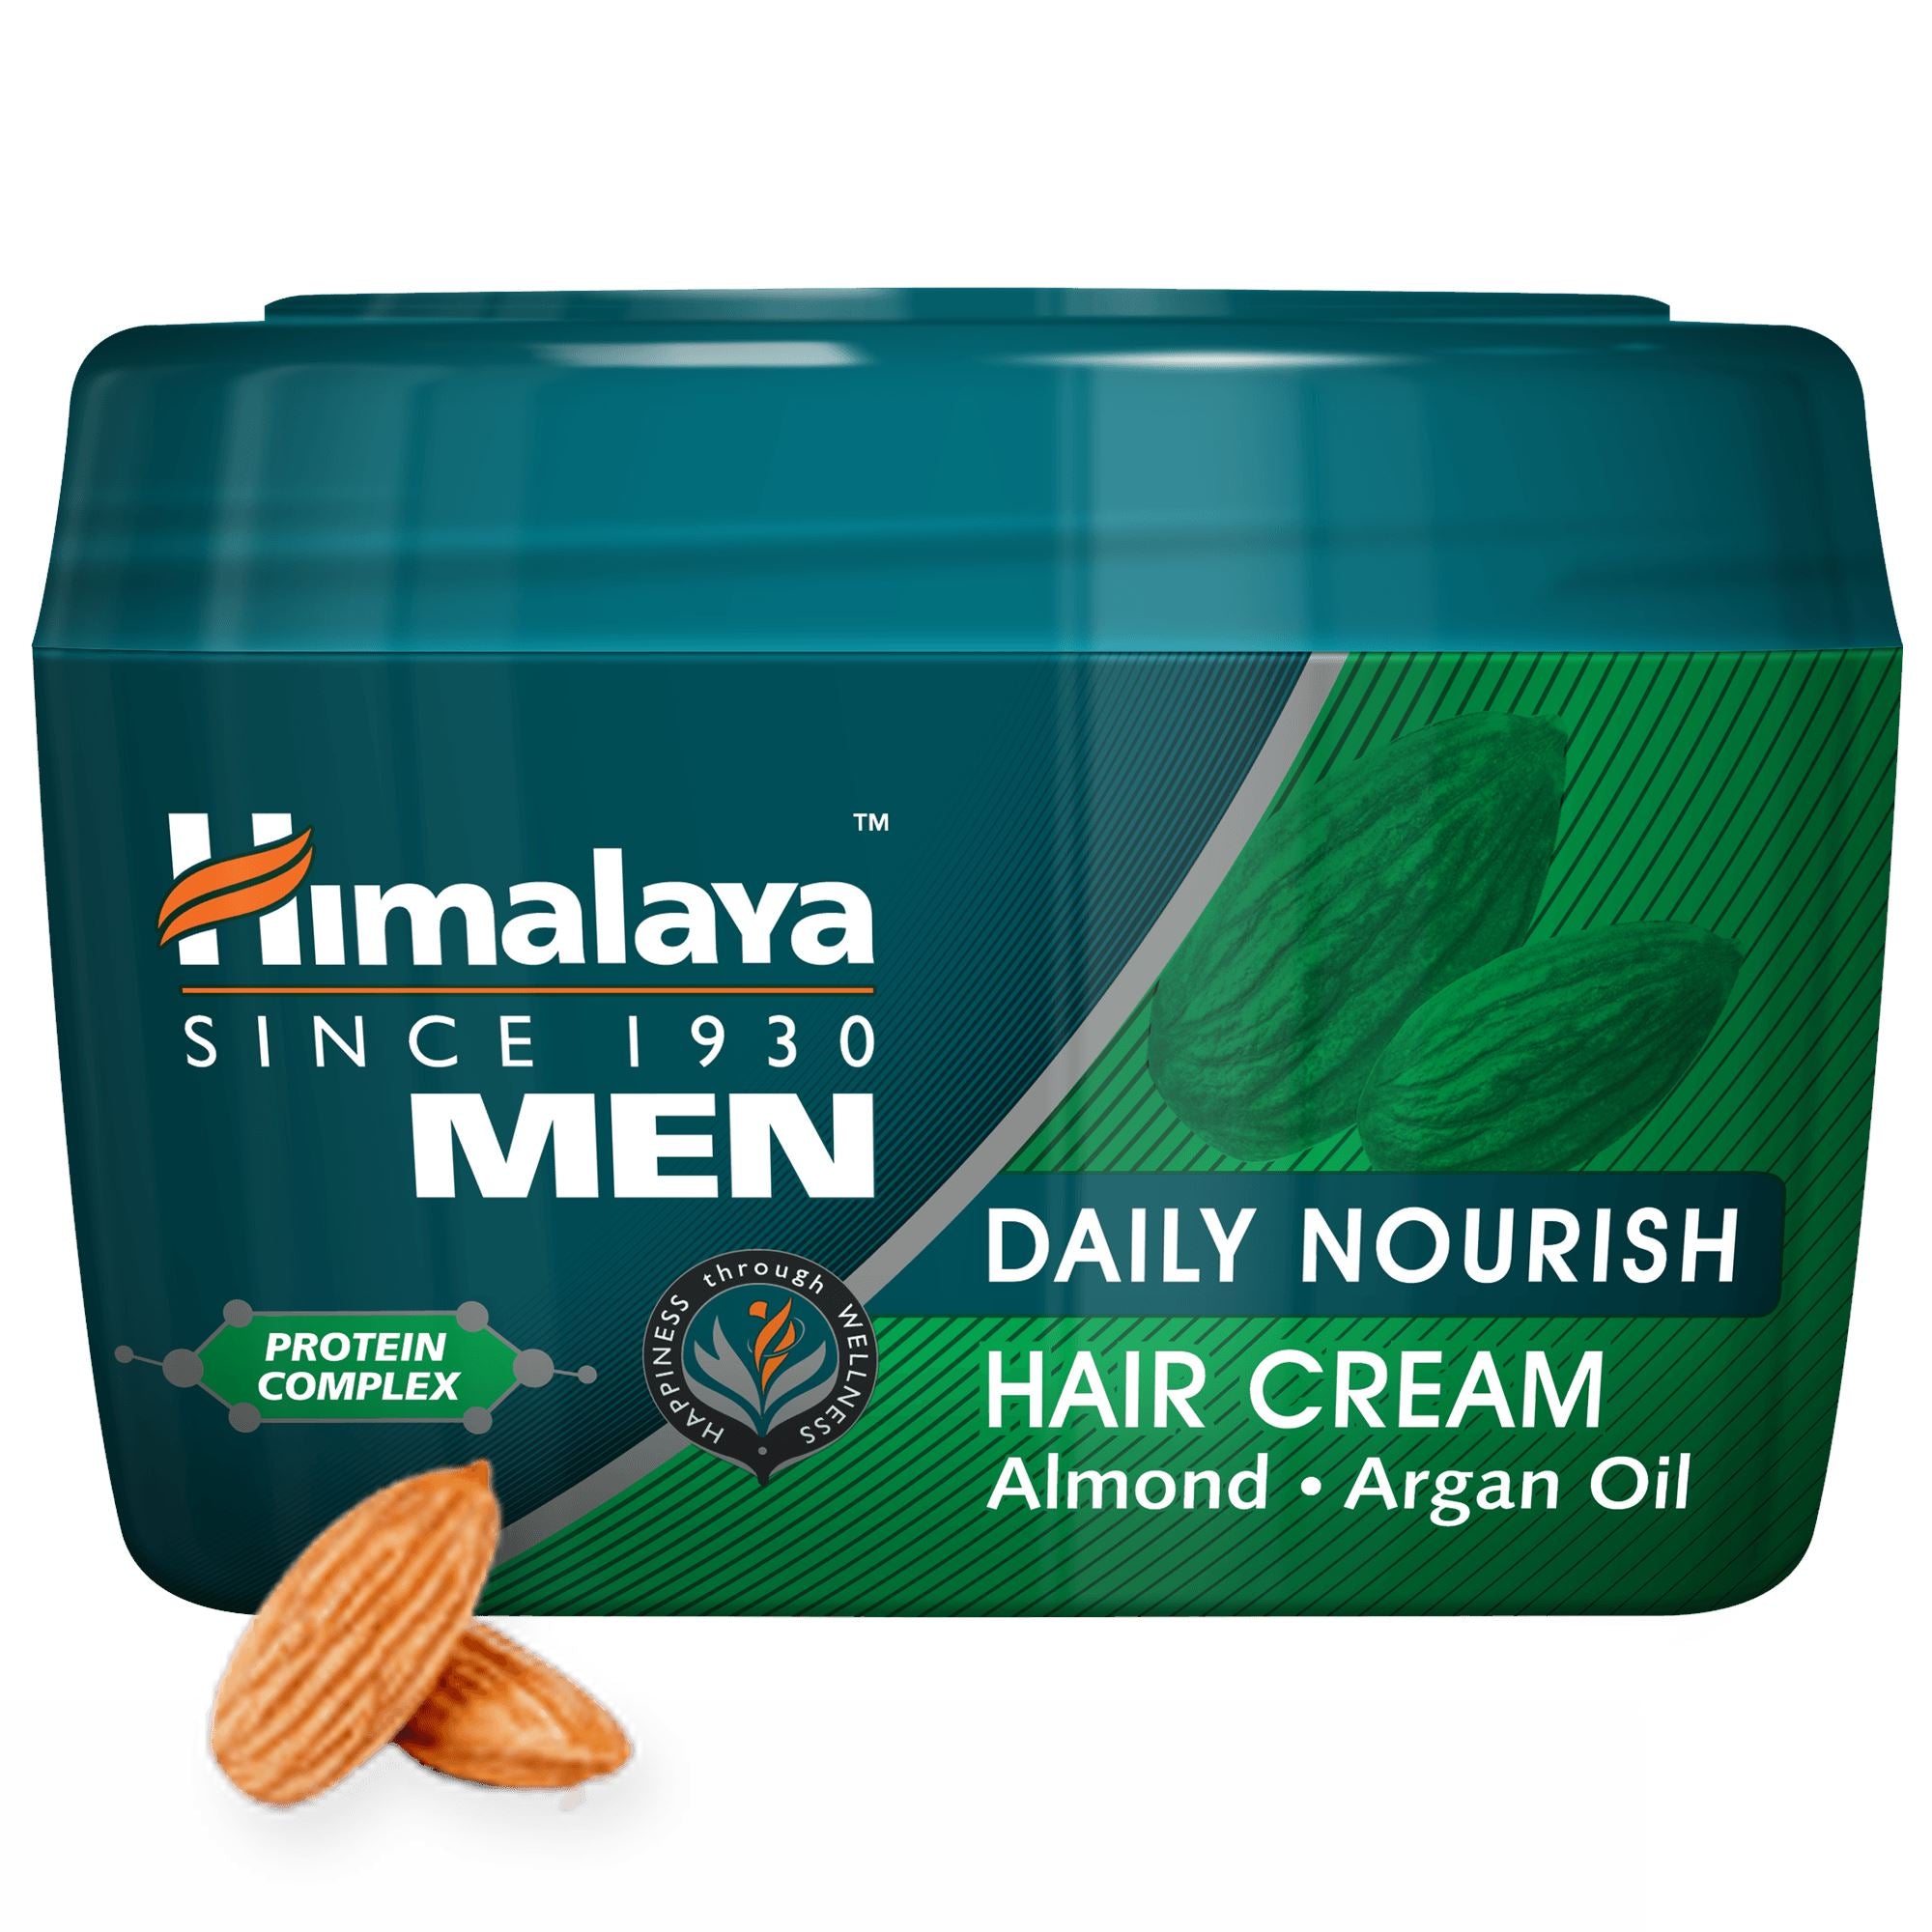 Himalaya MEN Daily Nourish Hair Cream 100g - Provides intense nourishment and revives your hair